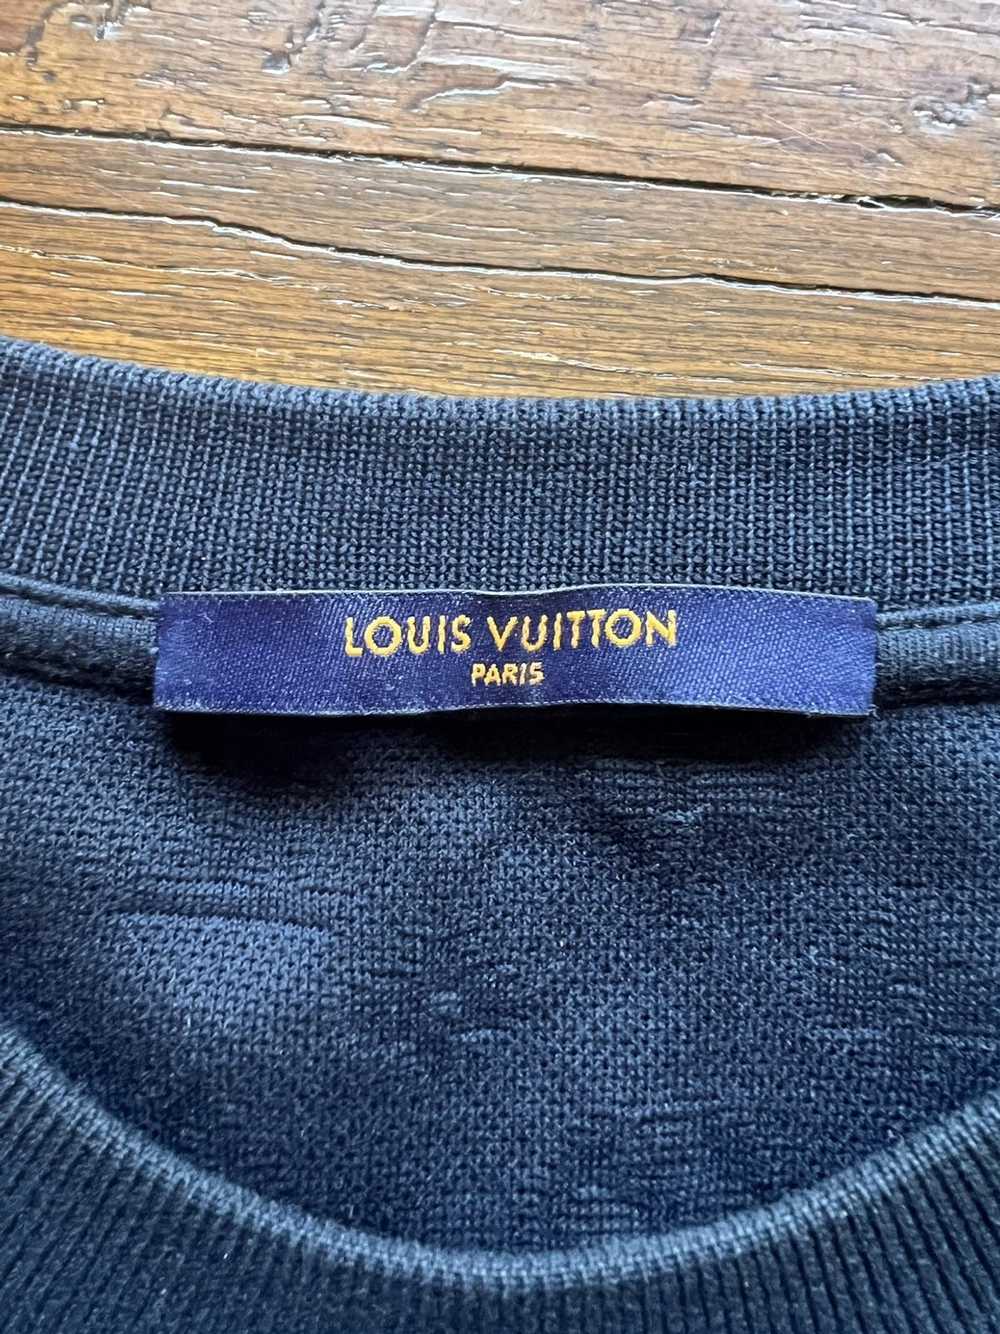 LV #LouisVuitton #Louis #Vuitton #Gold #Metal #Chrome #Silver #3D #Logo  #Icon #Fashion #Pink #Green #Teal #Bl…